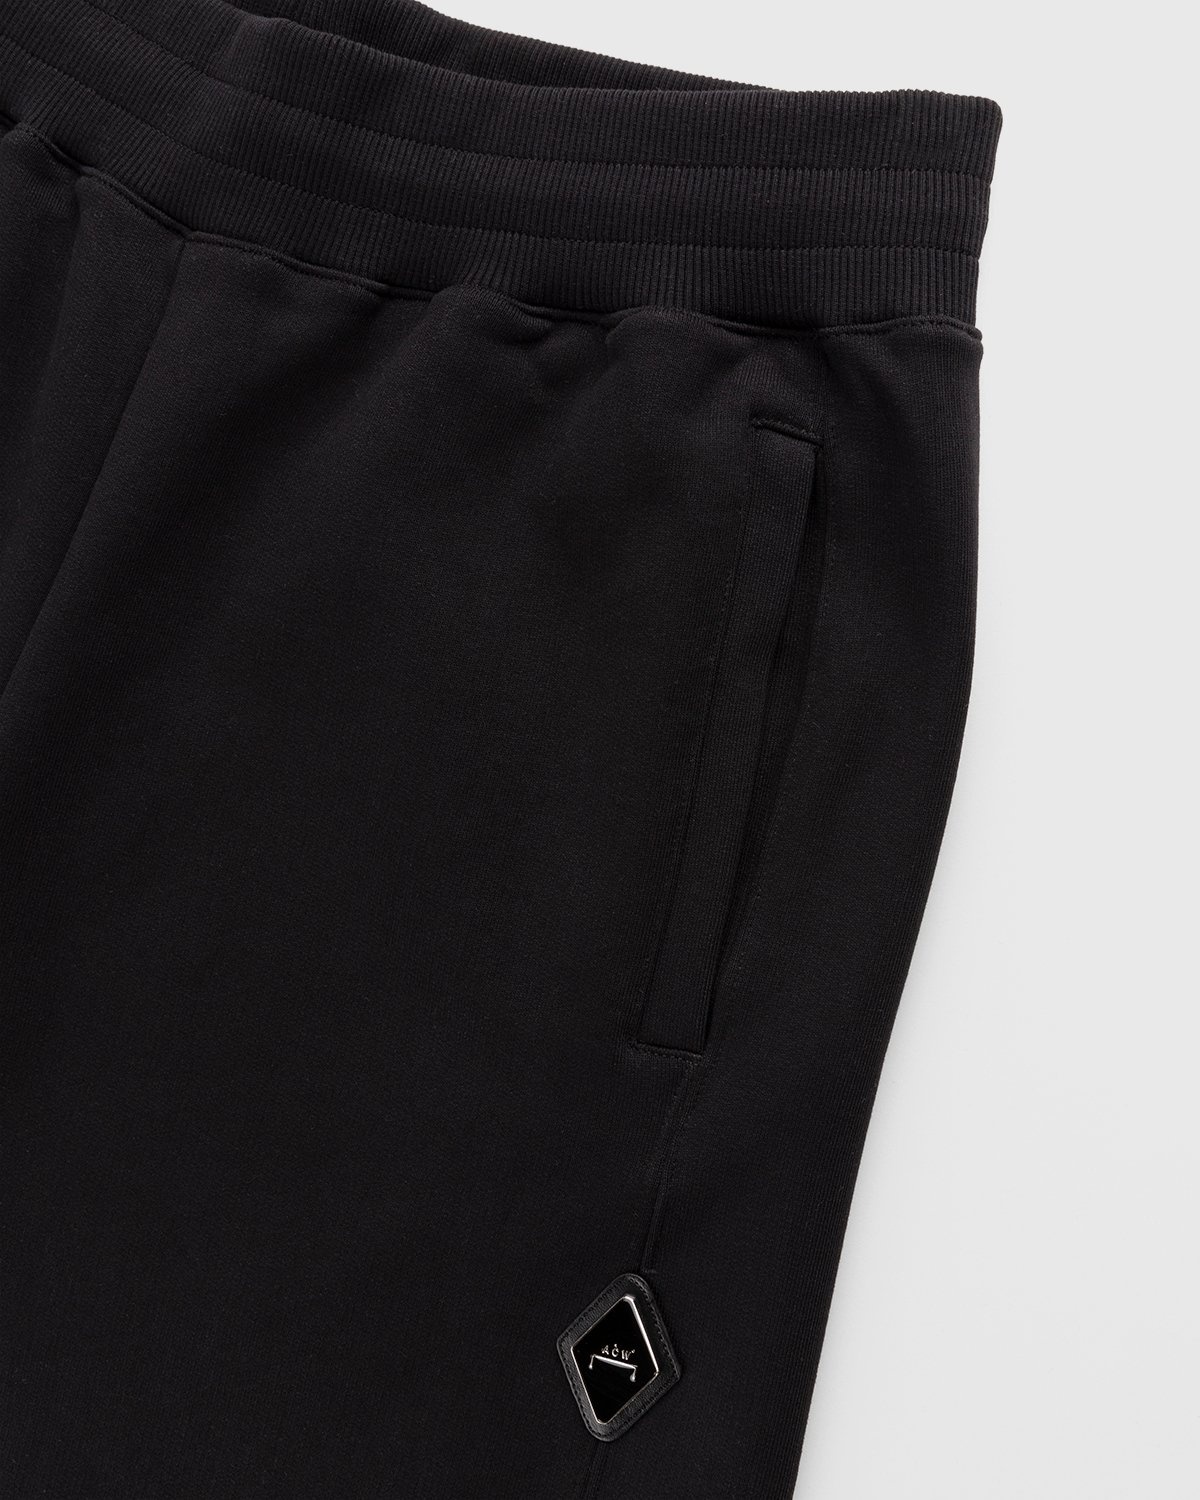 A-Cold-Wall* – Vault Shorts Black - Bermuda Cuts - Black - Image 4